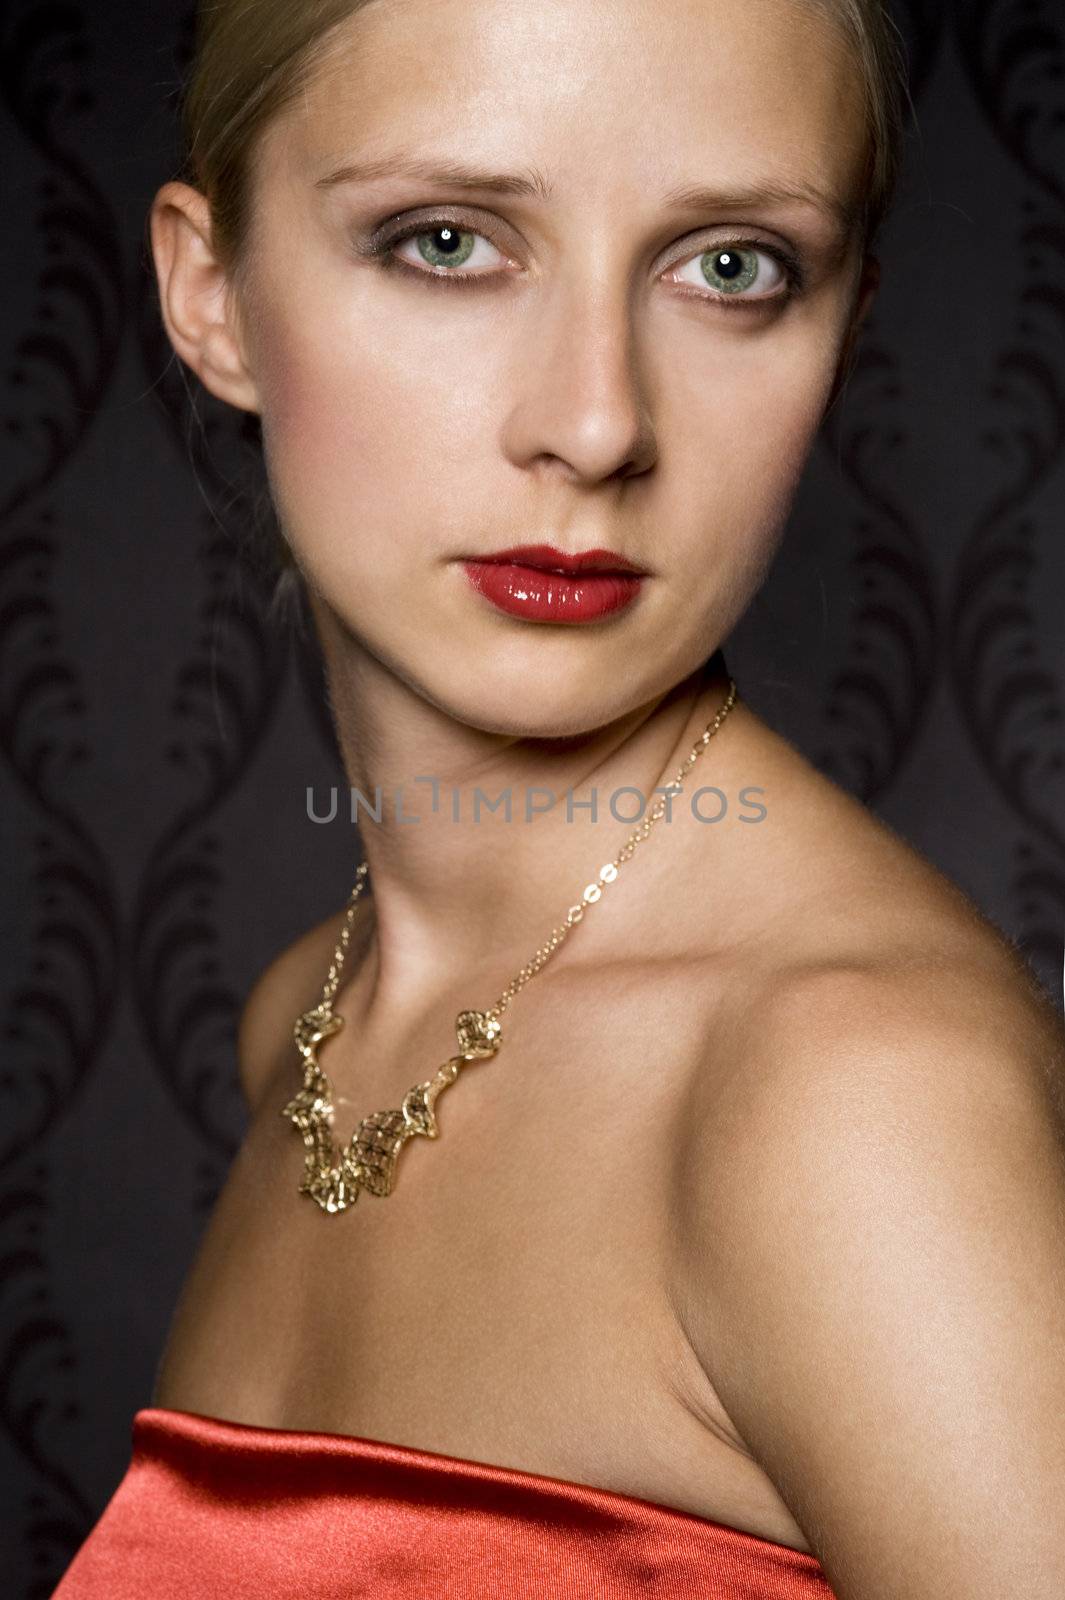 elegant woman wearing golden jewelry, over wallpaper background